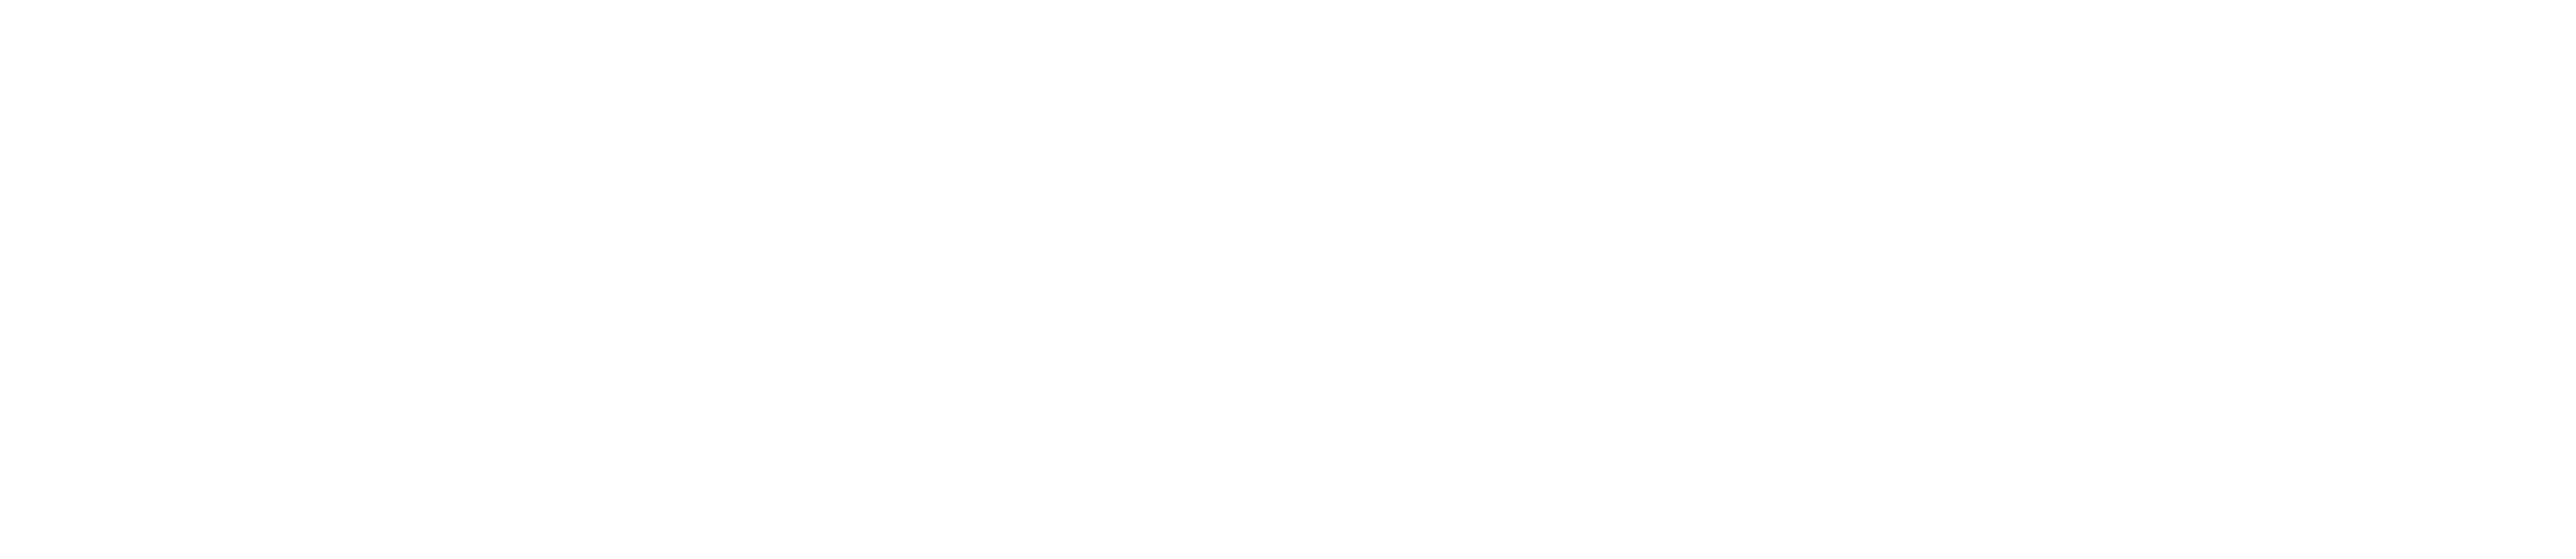 Bennington Wiring Diagram from club.benningtonmarine.com